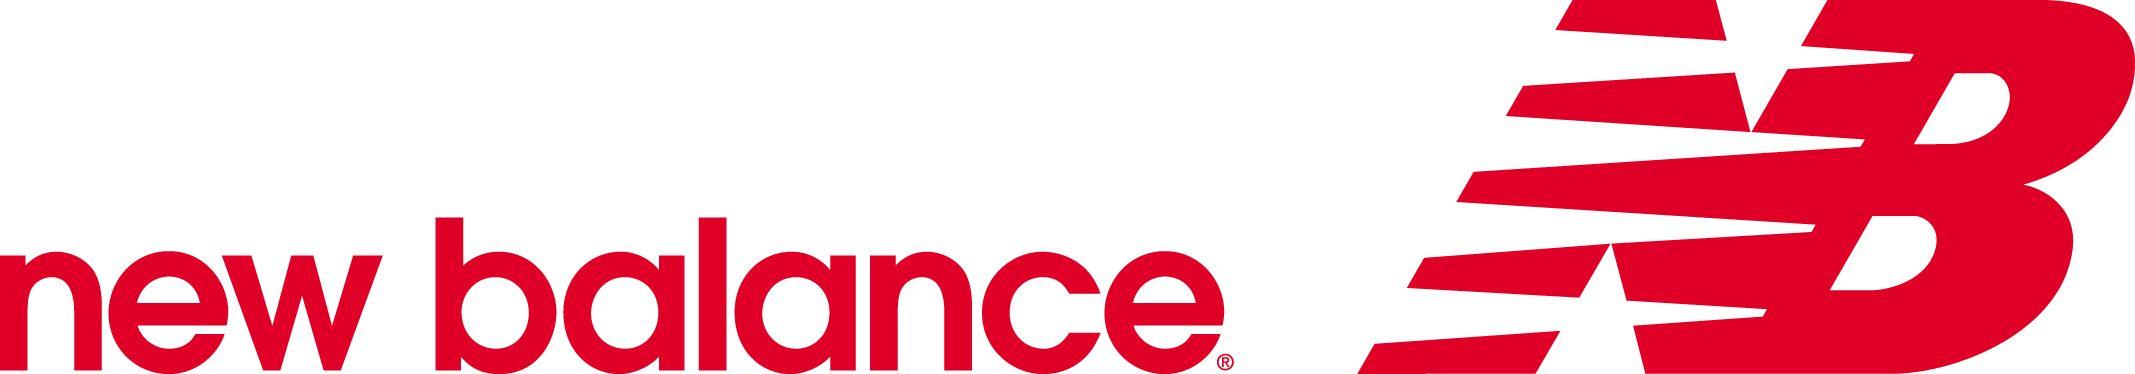 Official New Balance Logo - New balance Logos